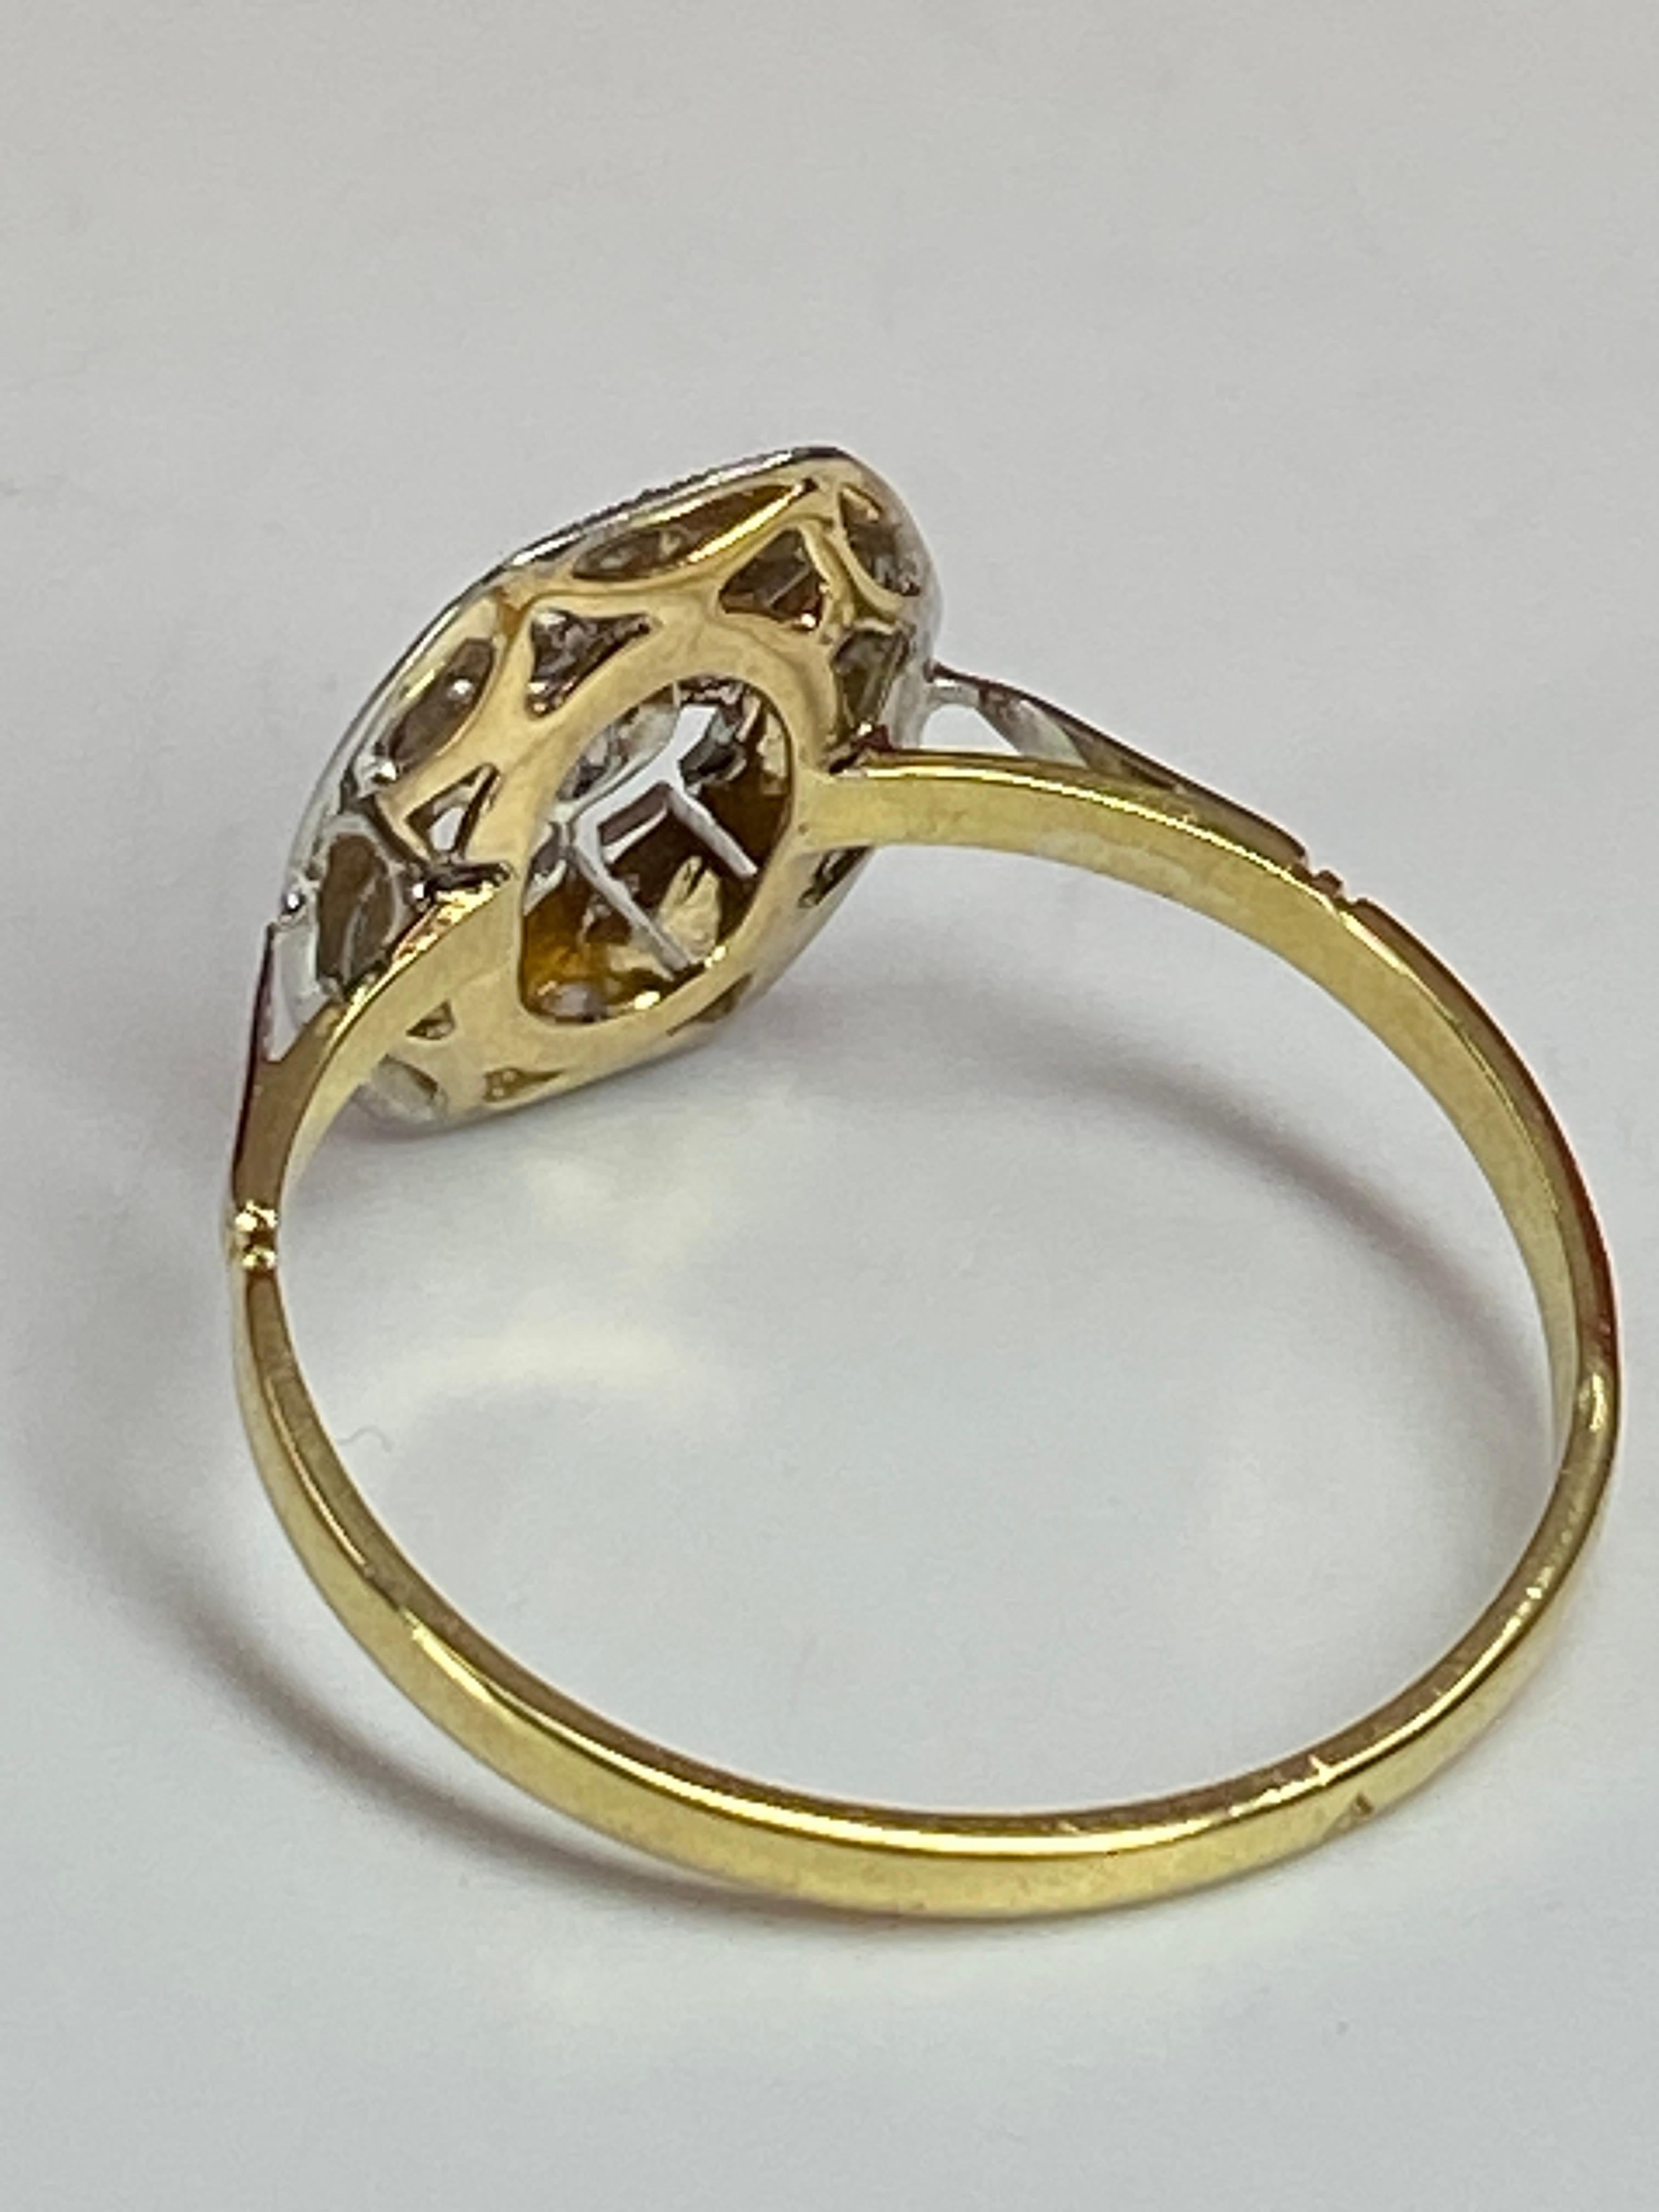 18 Carat Gold Ring Set with Diamonds, Art Déco Period 1